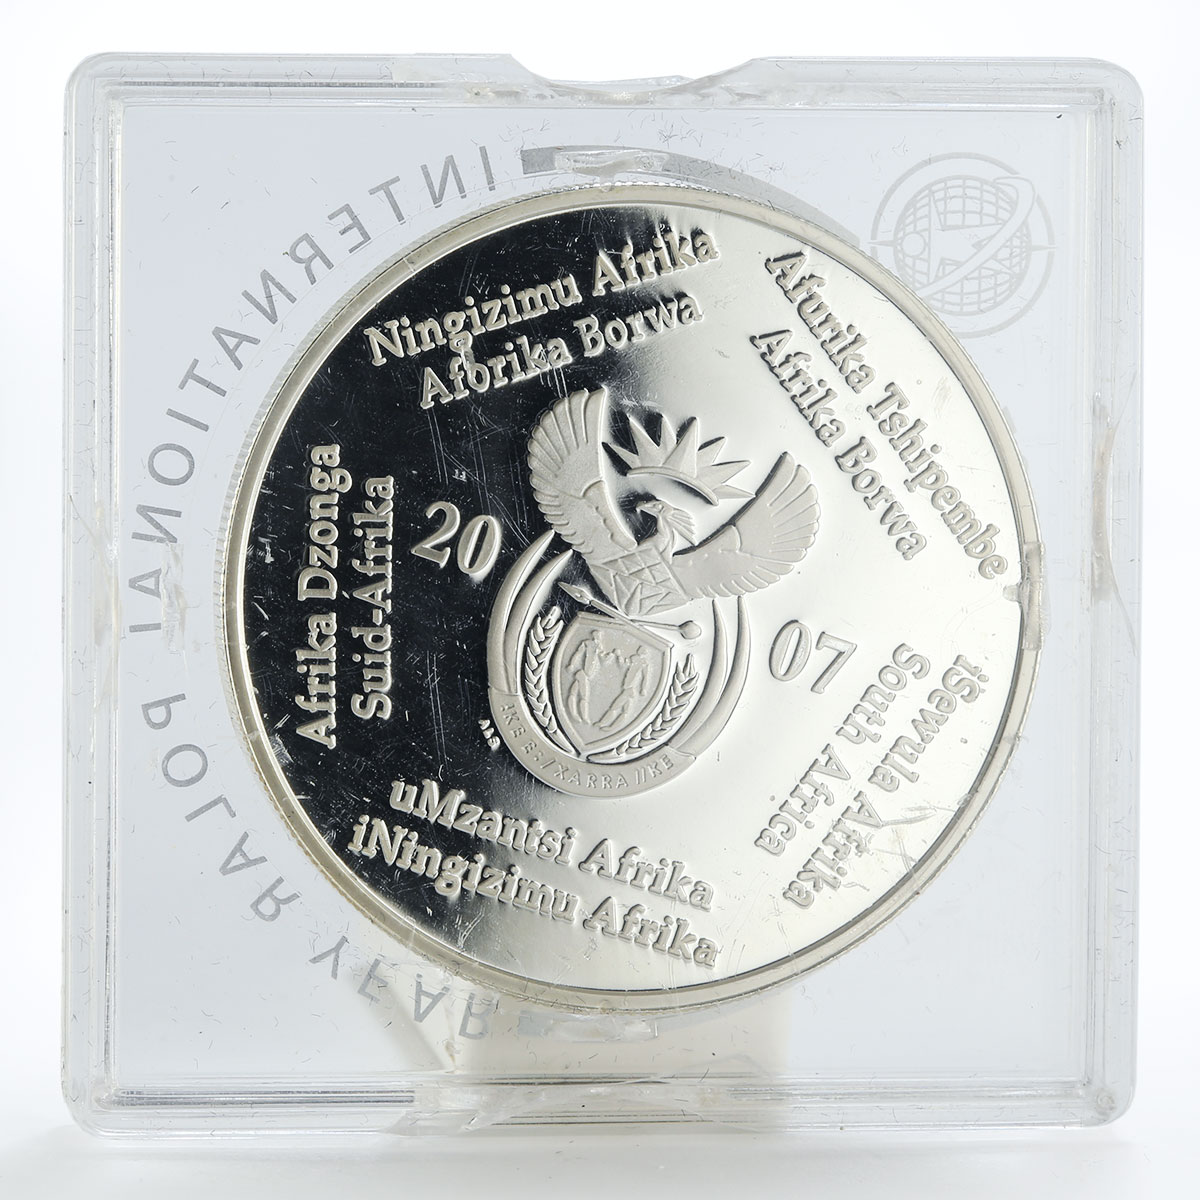 South Africa 2 Rand International Polar Year silver coin 2007